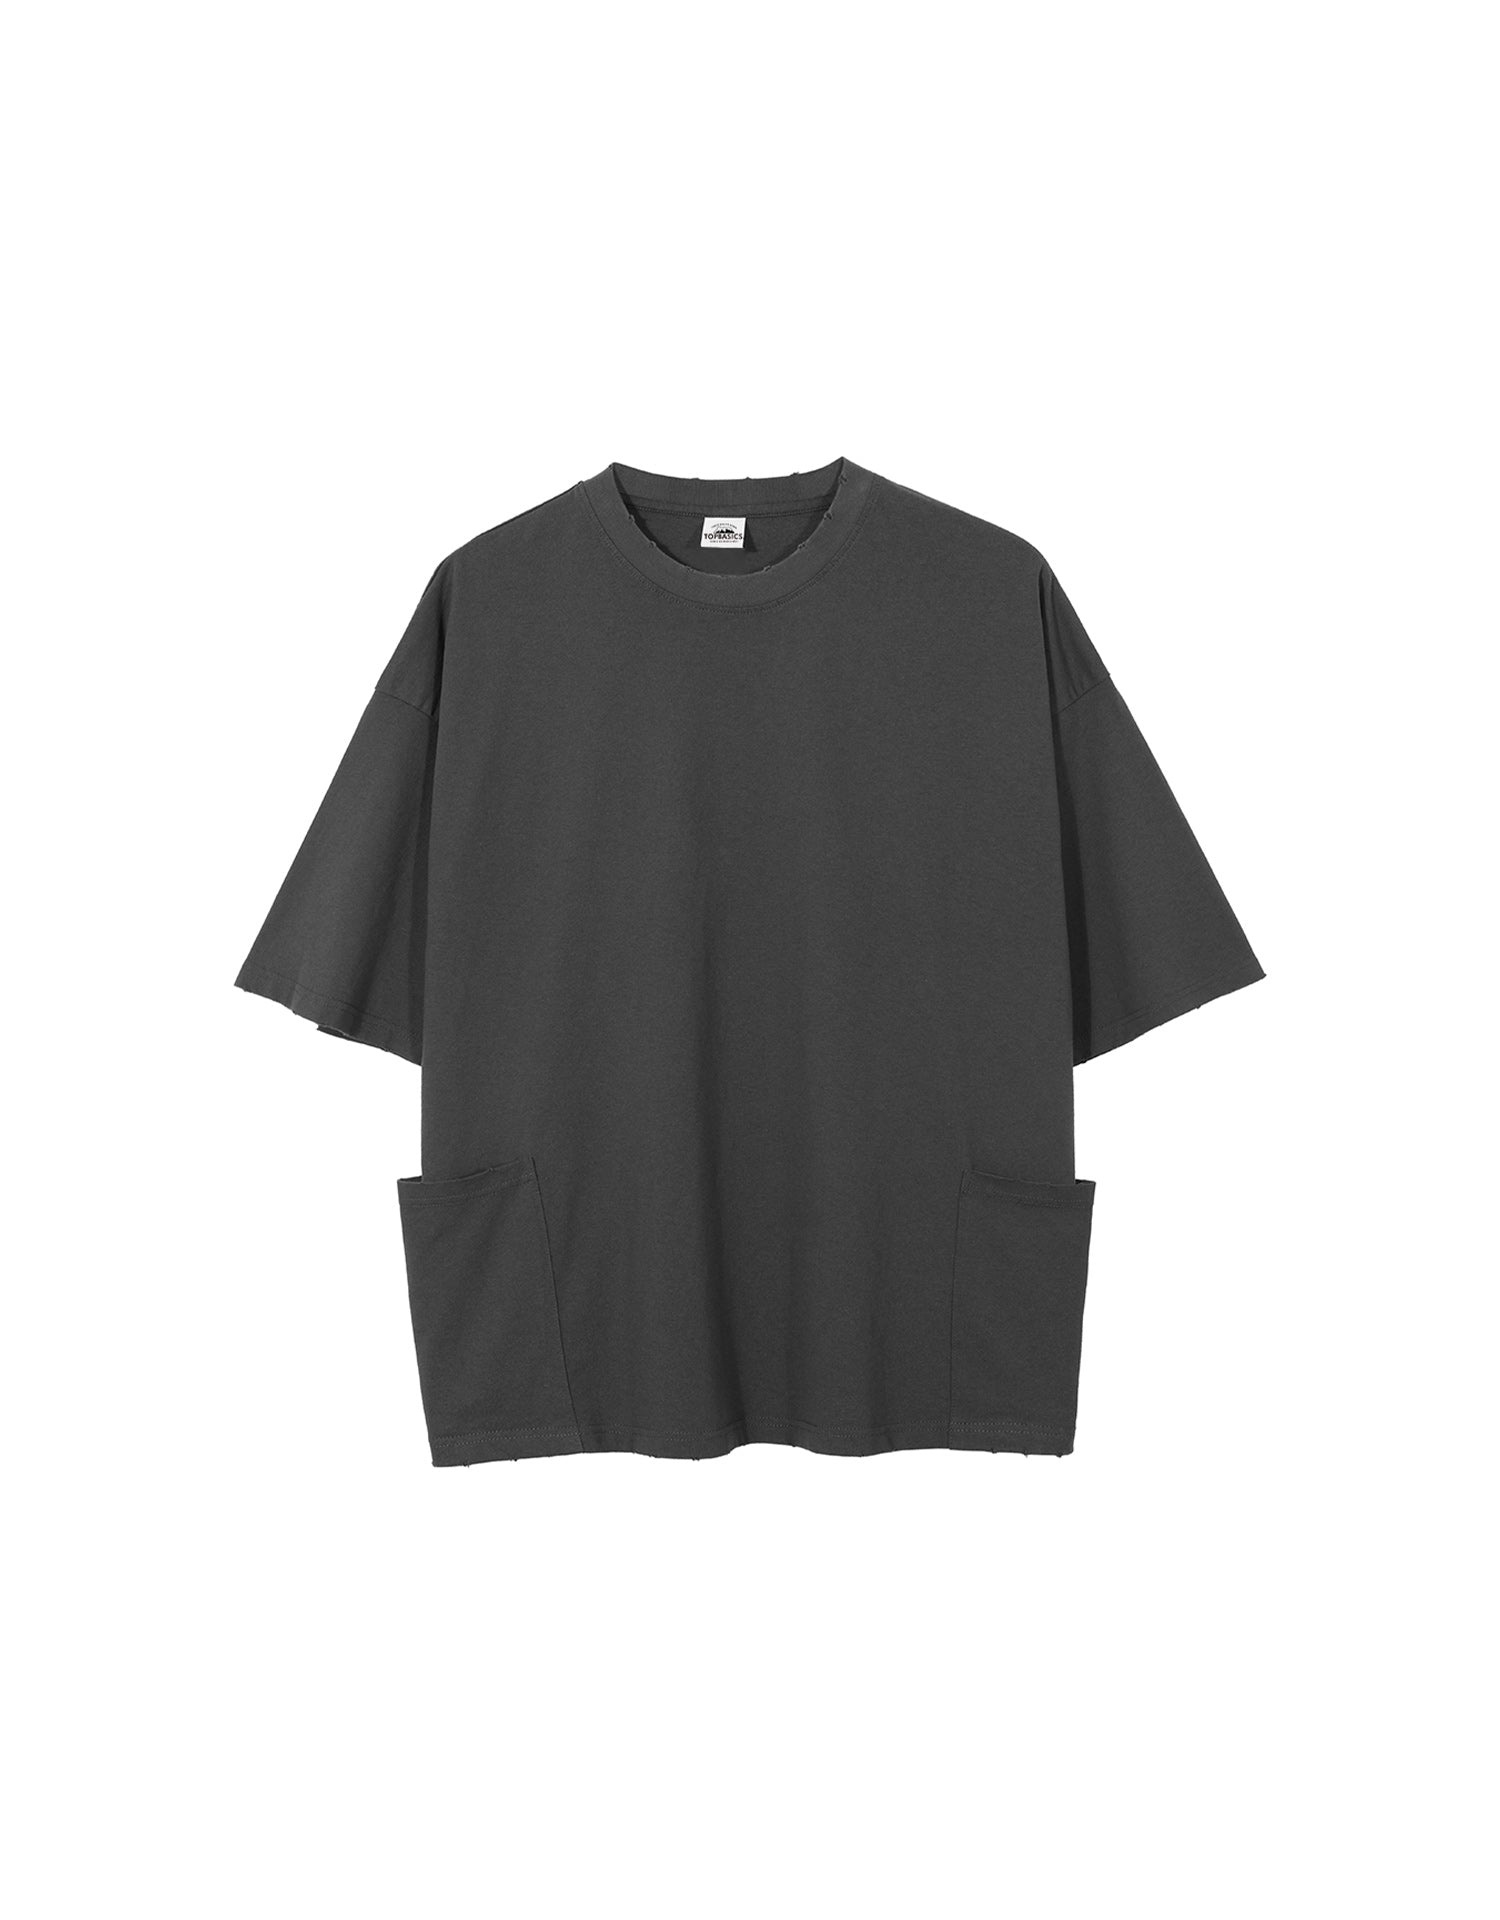 TopBasics Two Sided-Pockets T-Shirt